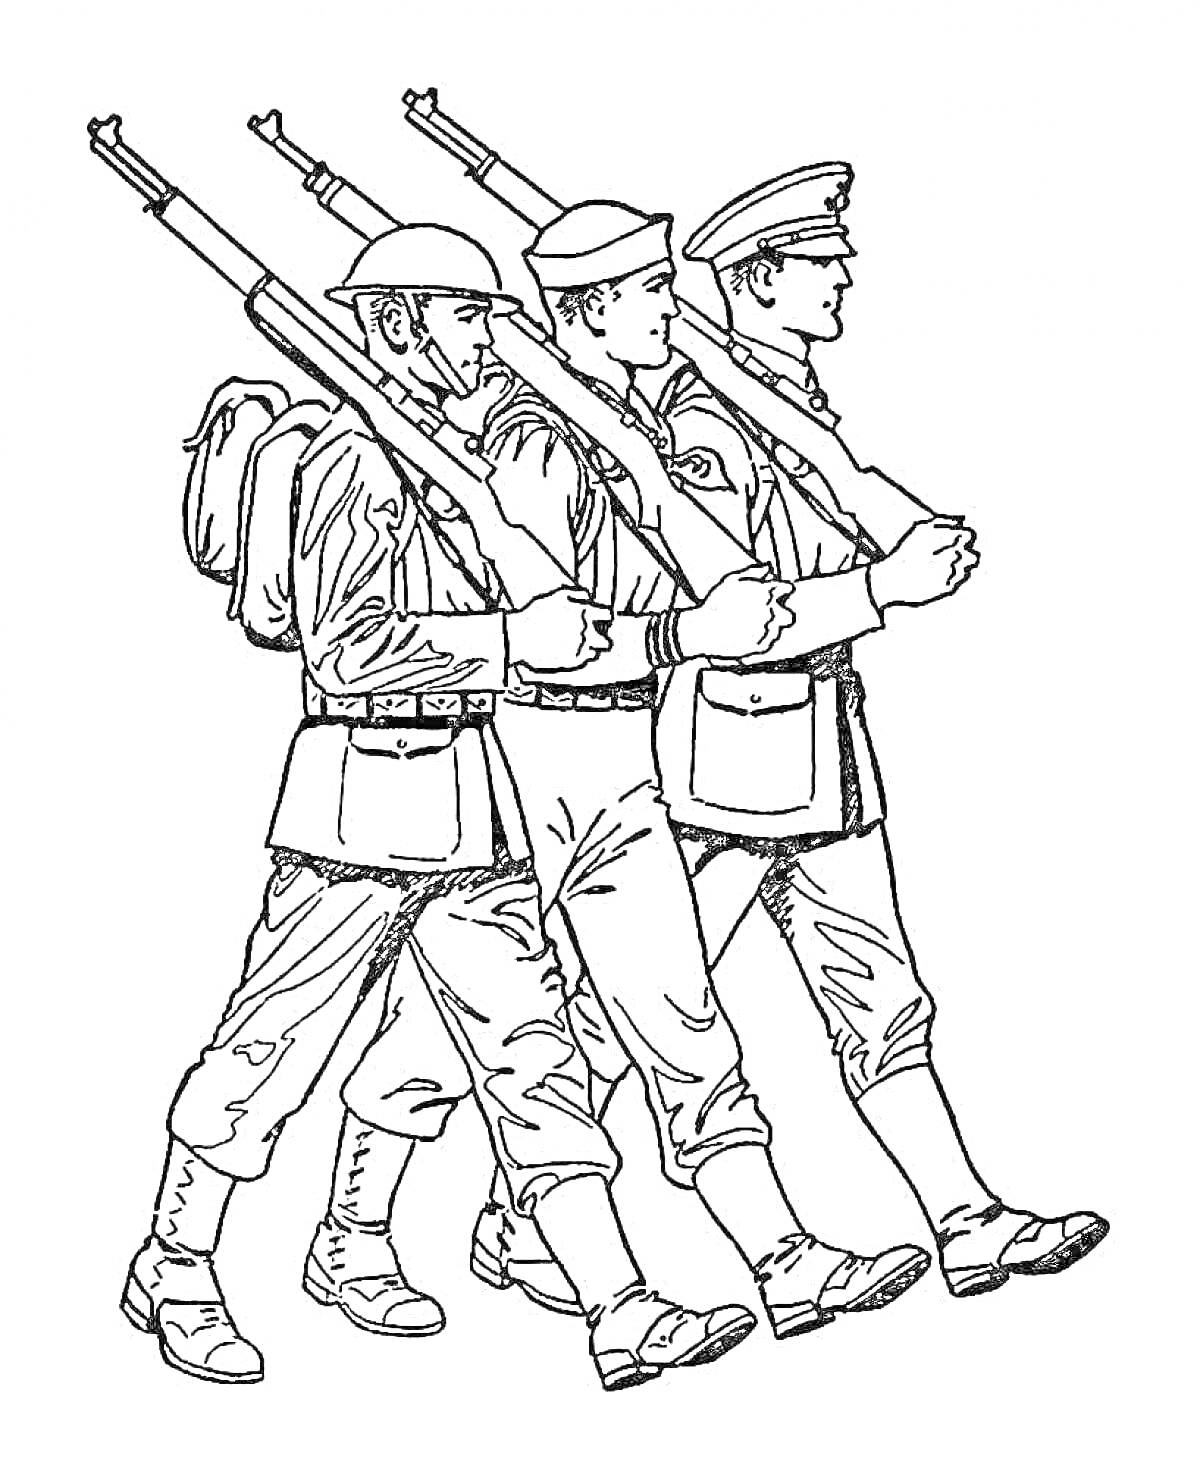 Раскраска Три марширующих солдата с винтовками на плечах